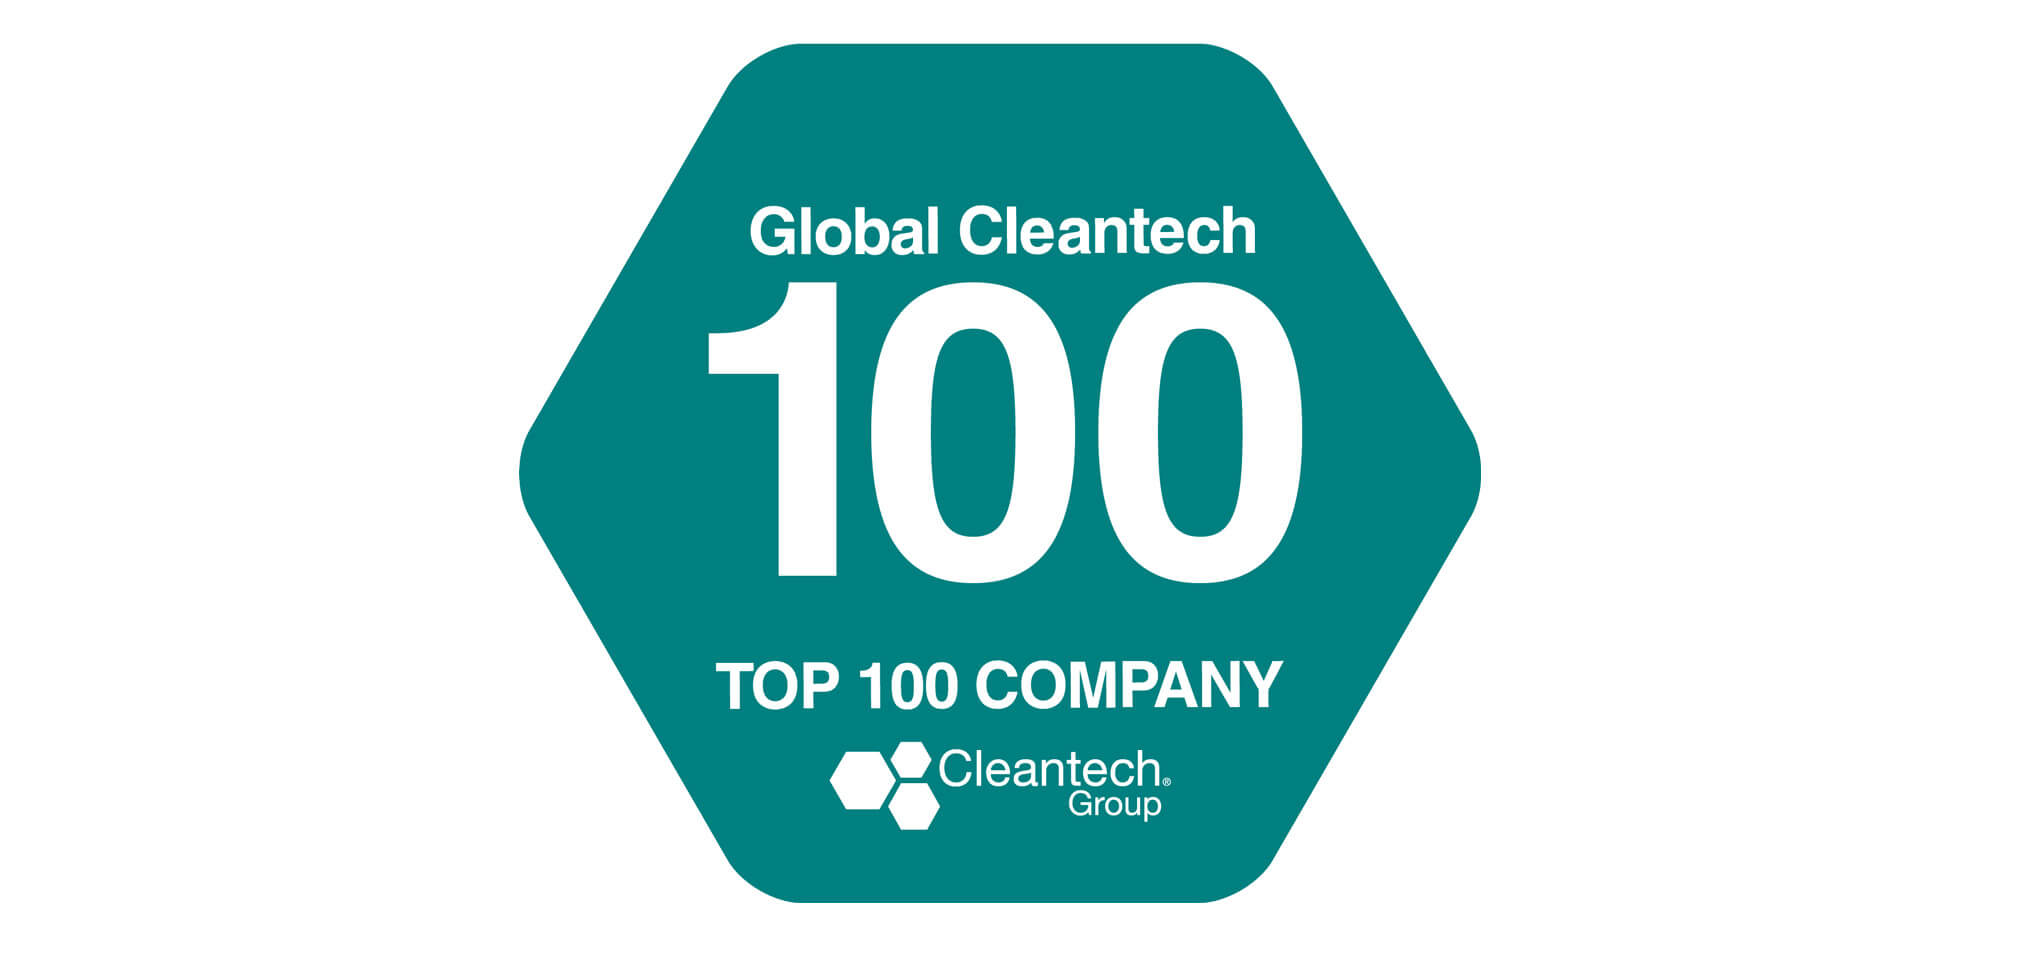 Skeleton Technologies Global Cleantech 100 - 2018